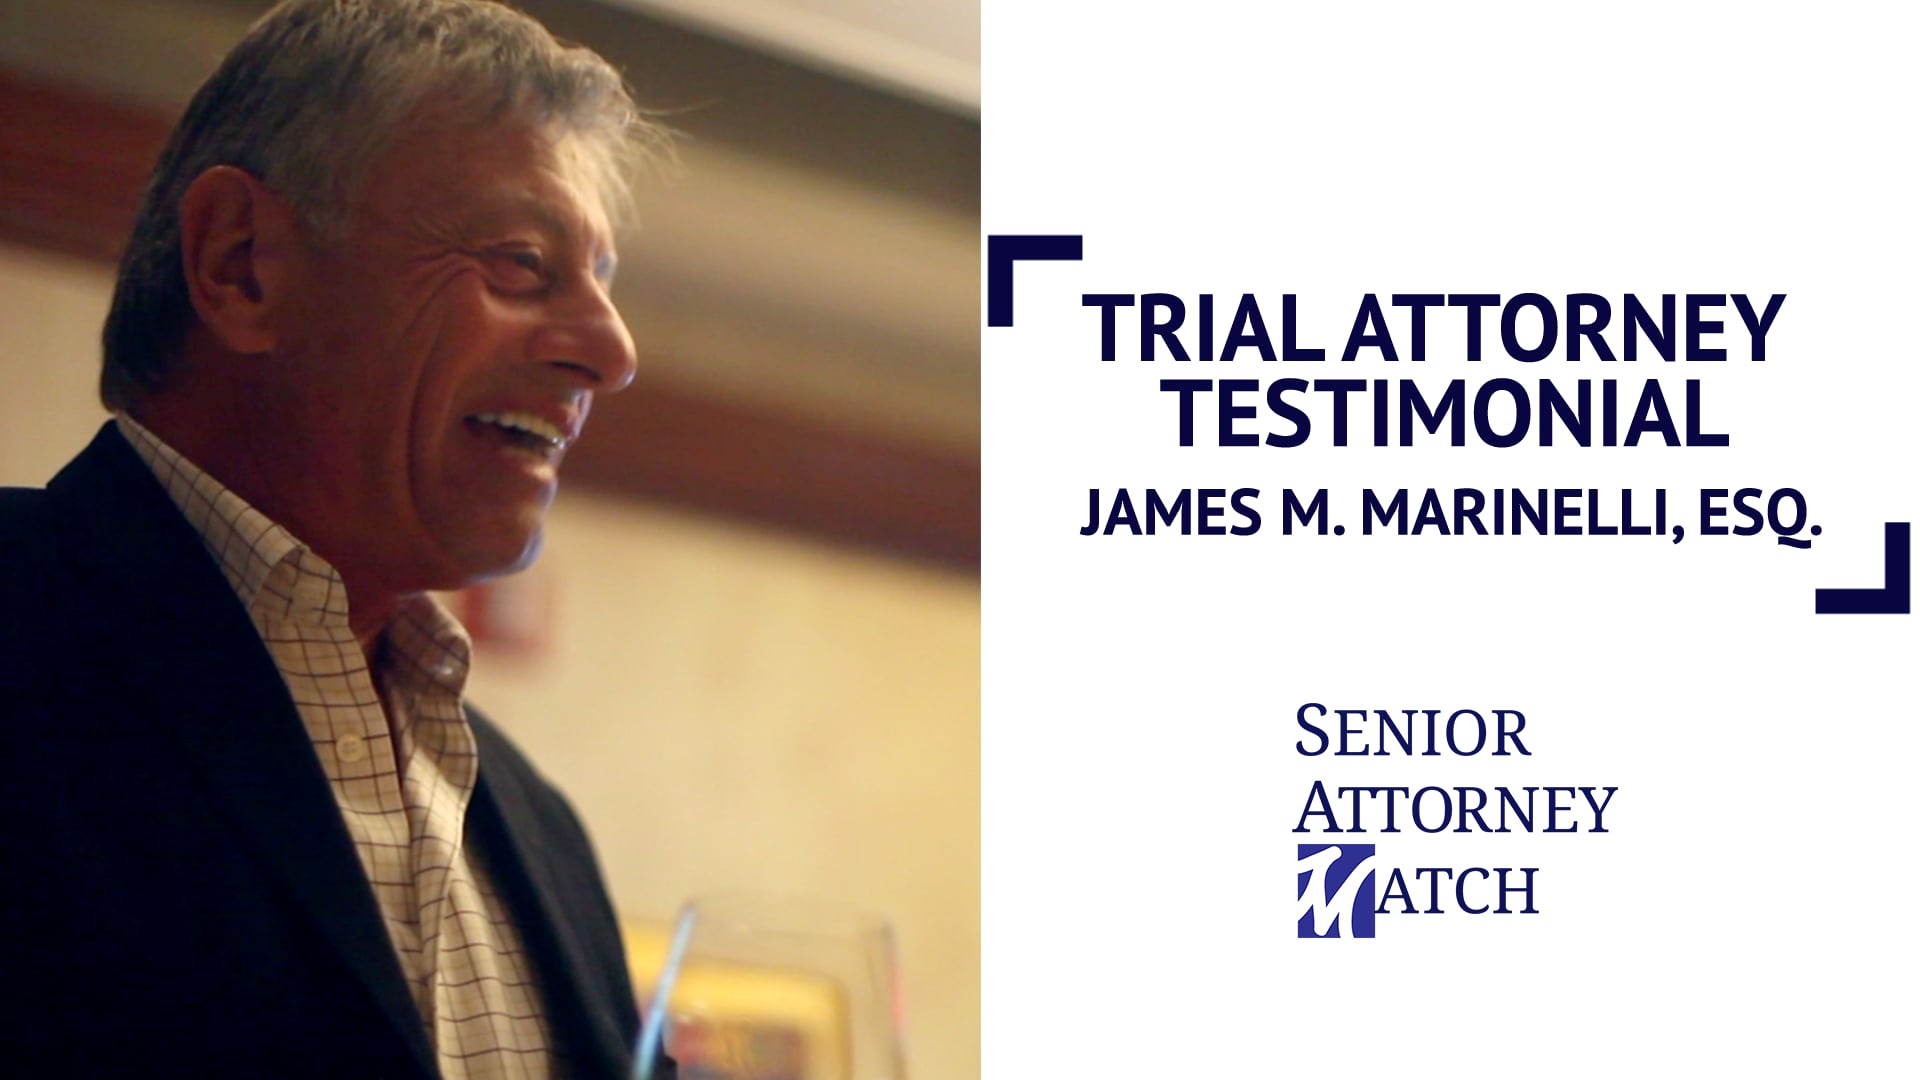 Senior Attorney Match Testimonial For Aaj Jim Marinelli On Vimeo